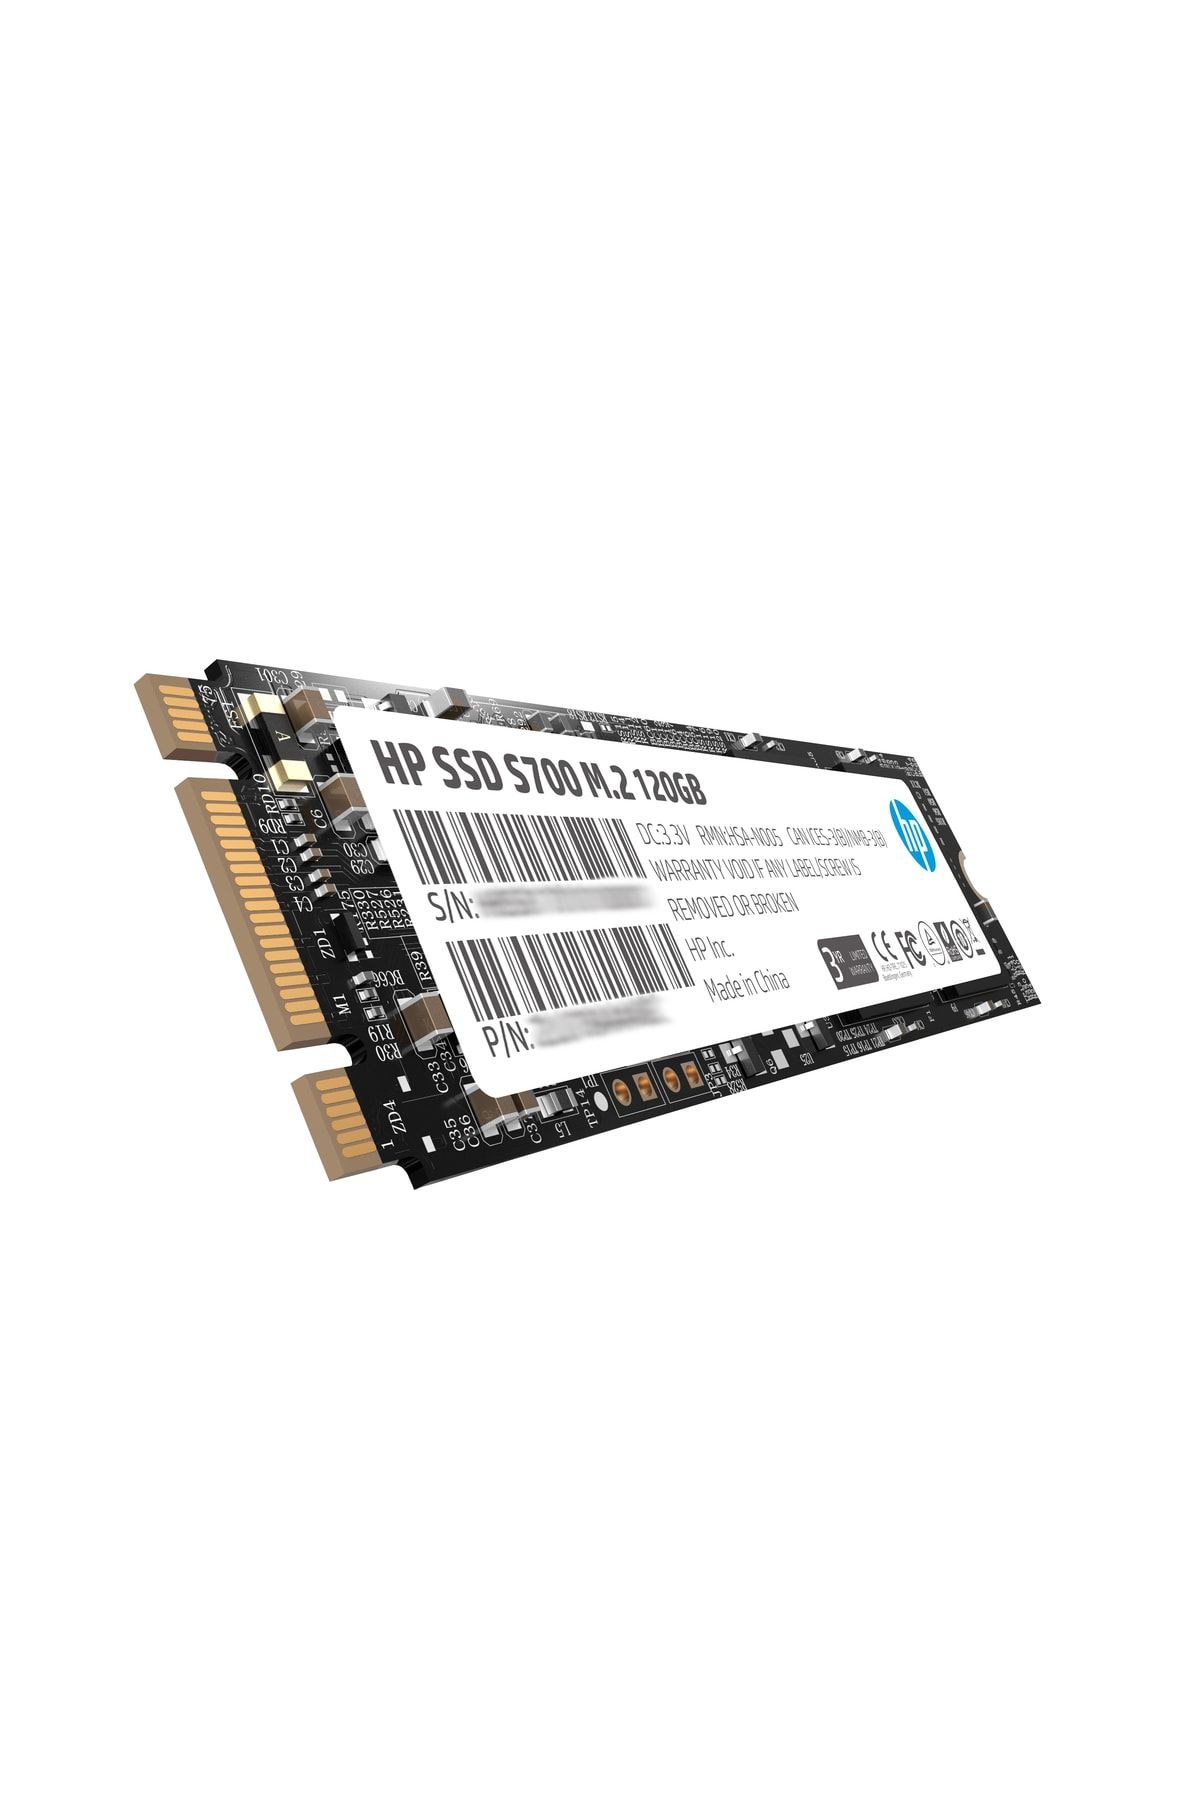 HP S700 120GB M.2 2280 SATA Dahili SSD Disk